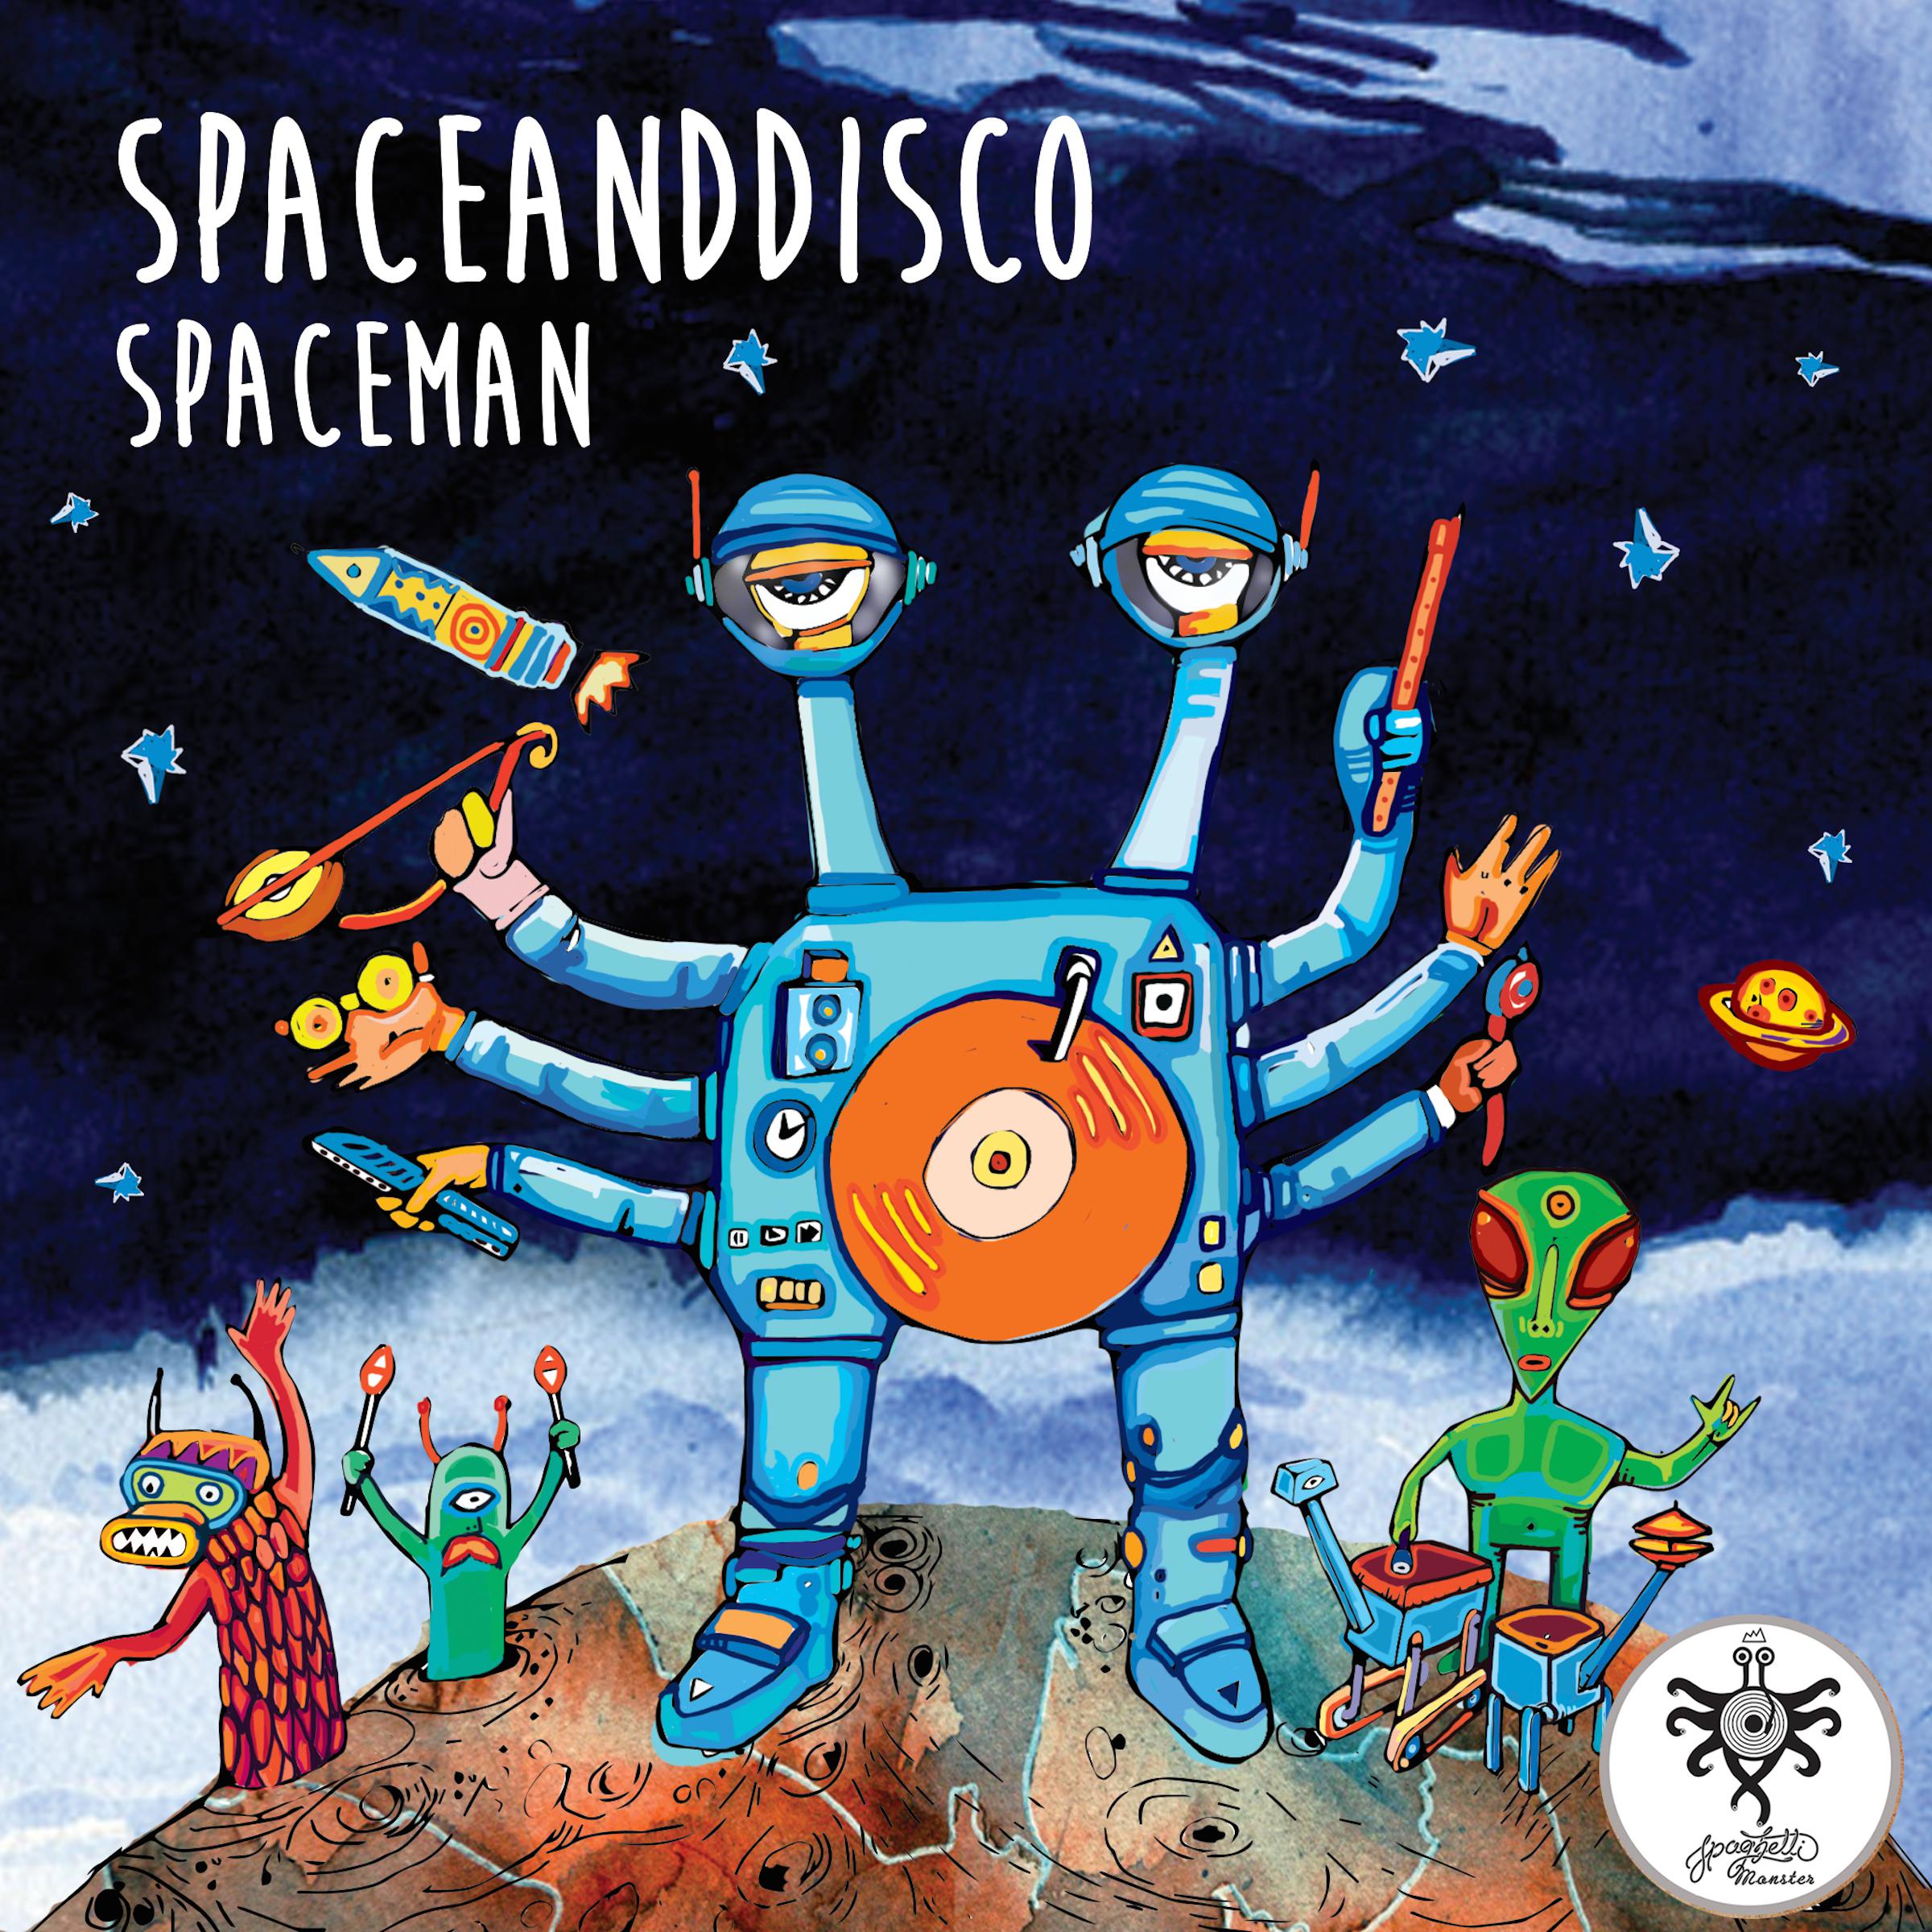 Spaceanddisco - Spaceman (Square Room Heroes Remix)